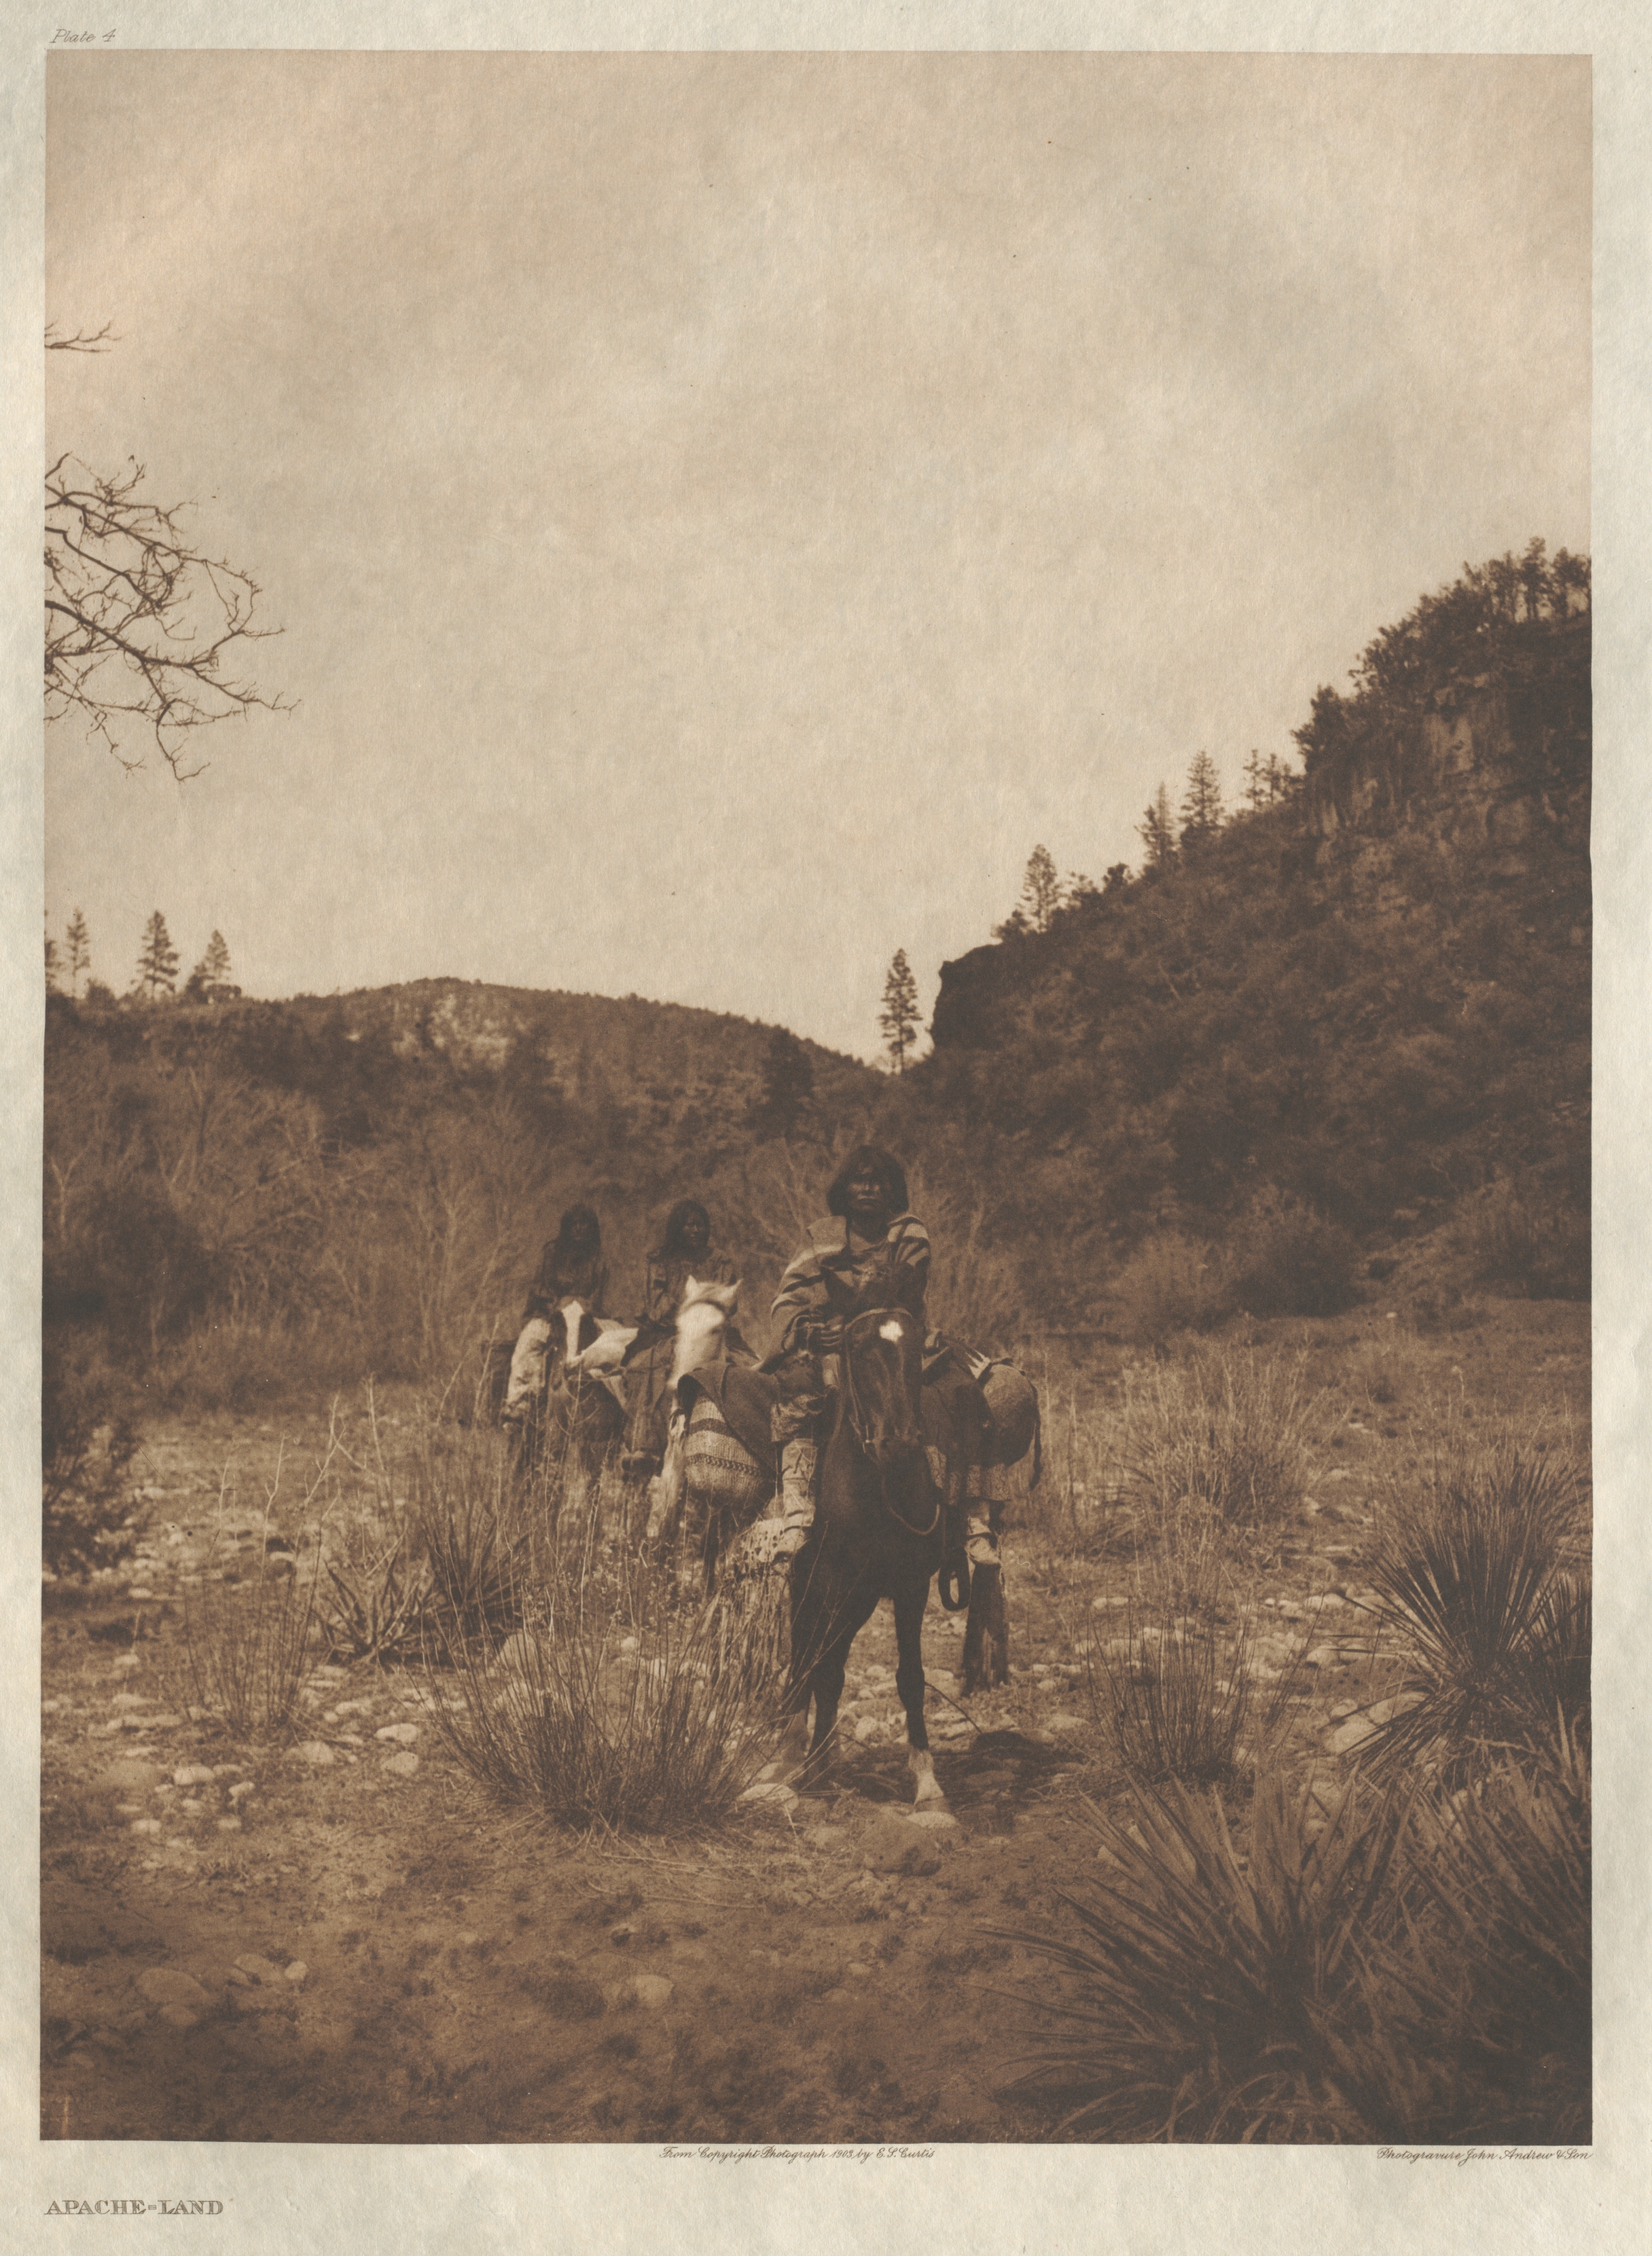 Portfolio I, Plate 4: Apache-Land